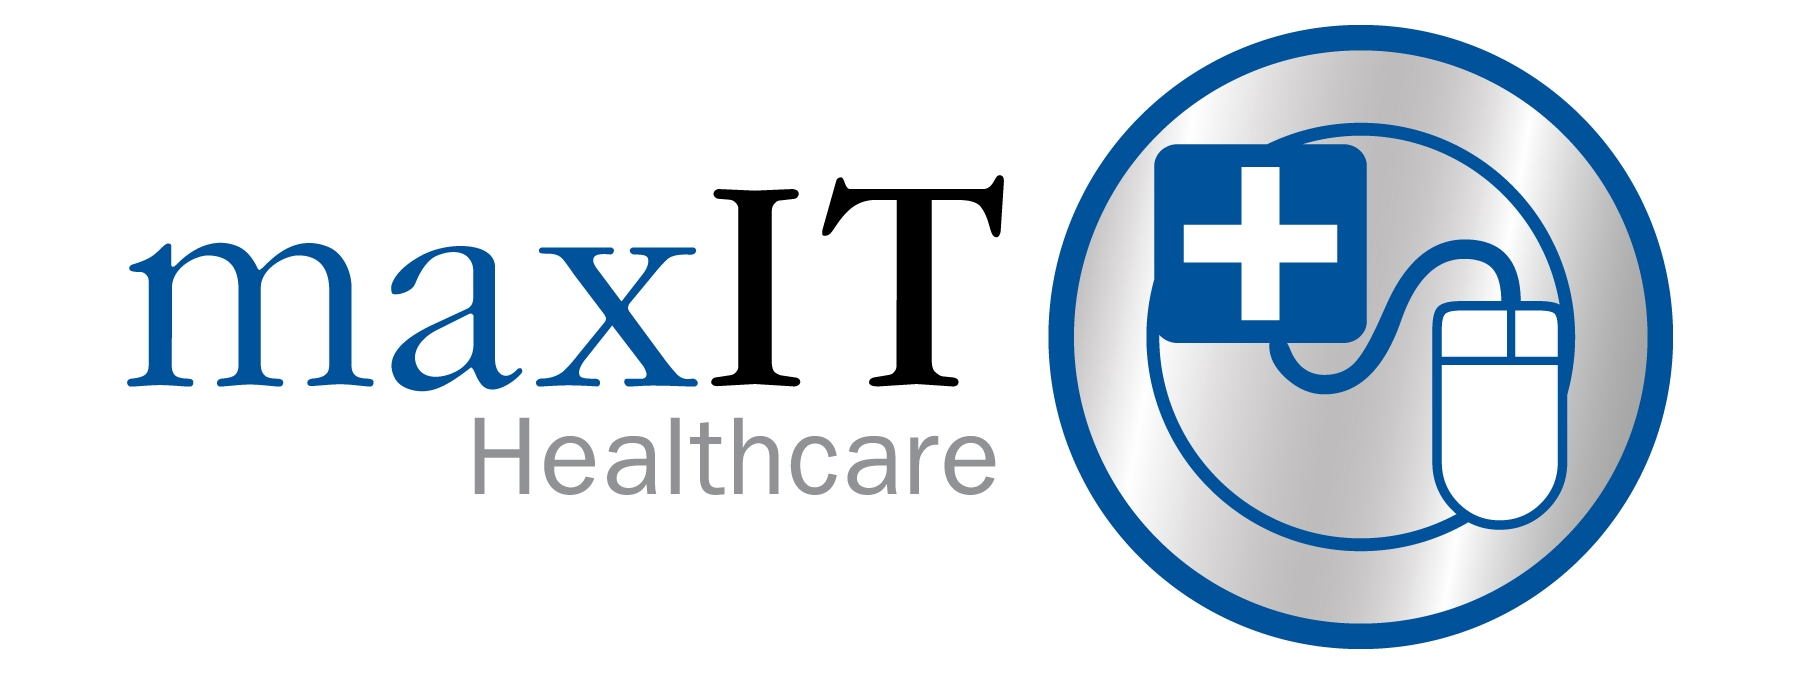 maxIT Healthcare logo